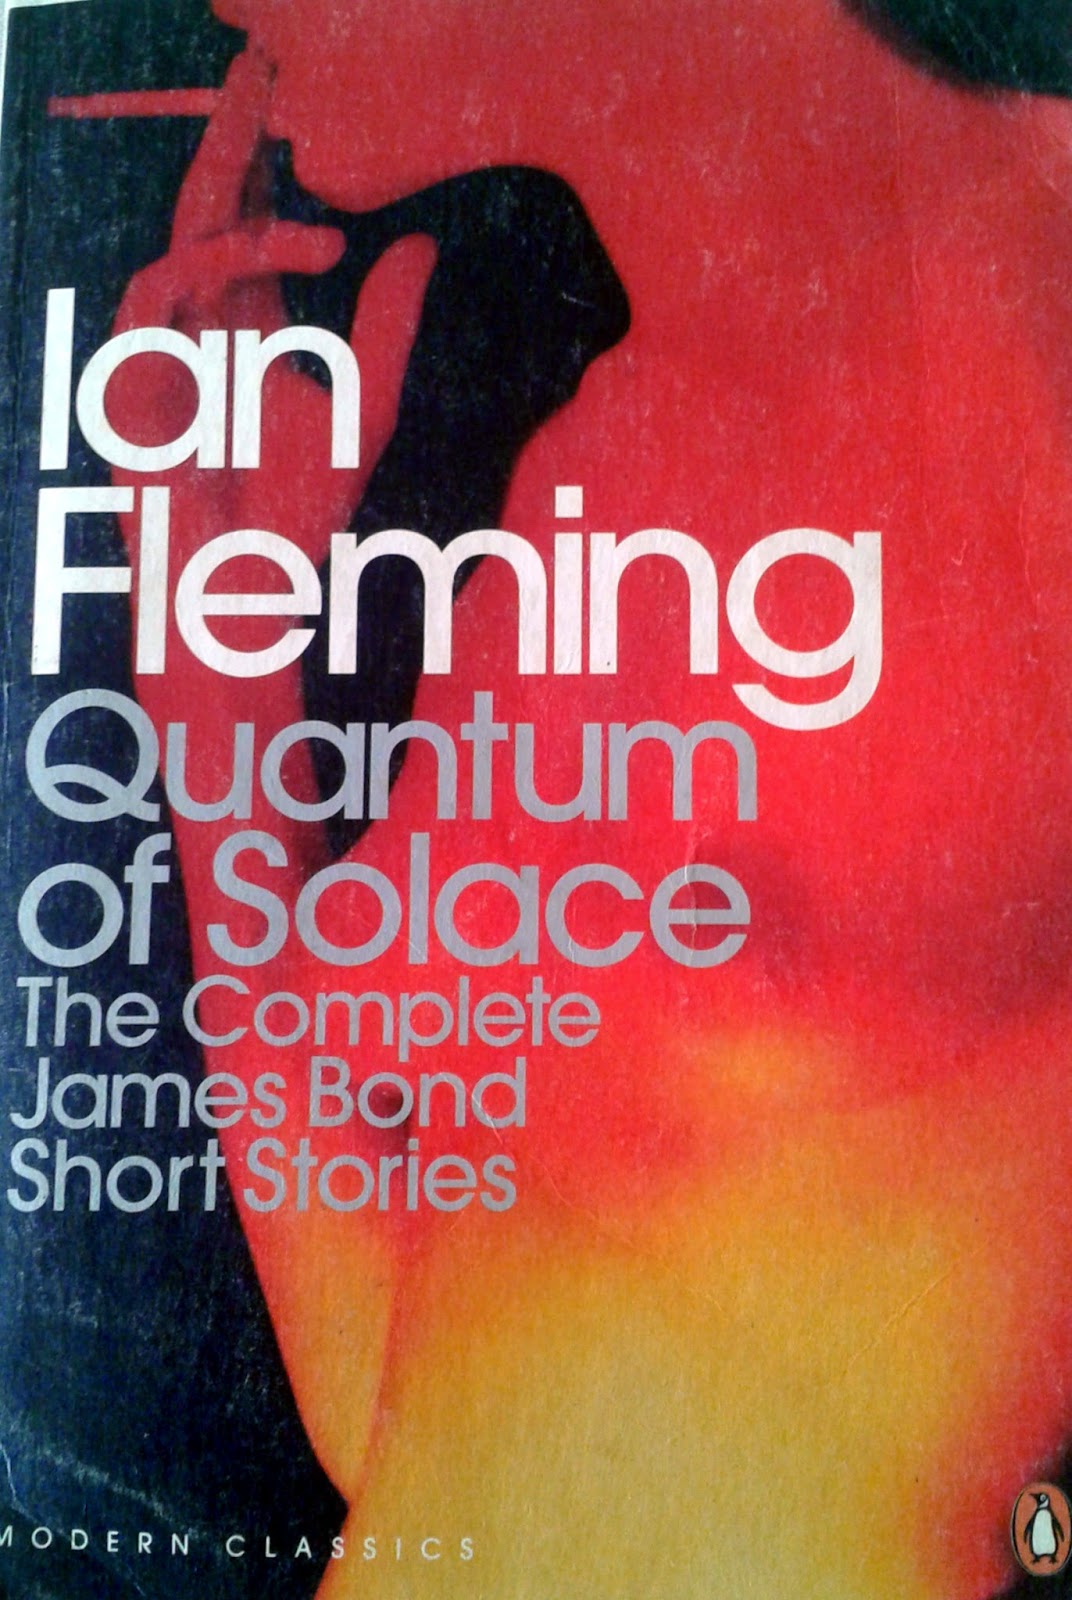 A Celebration Of Ian Fleming